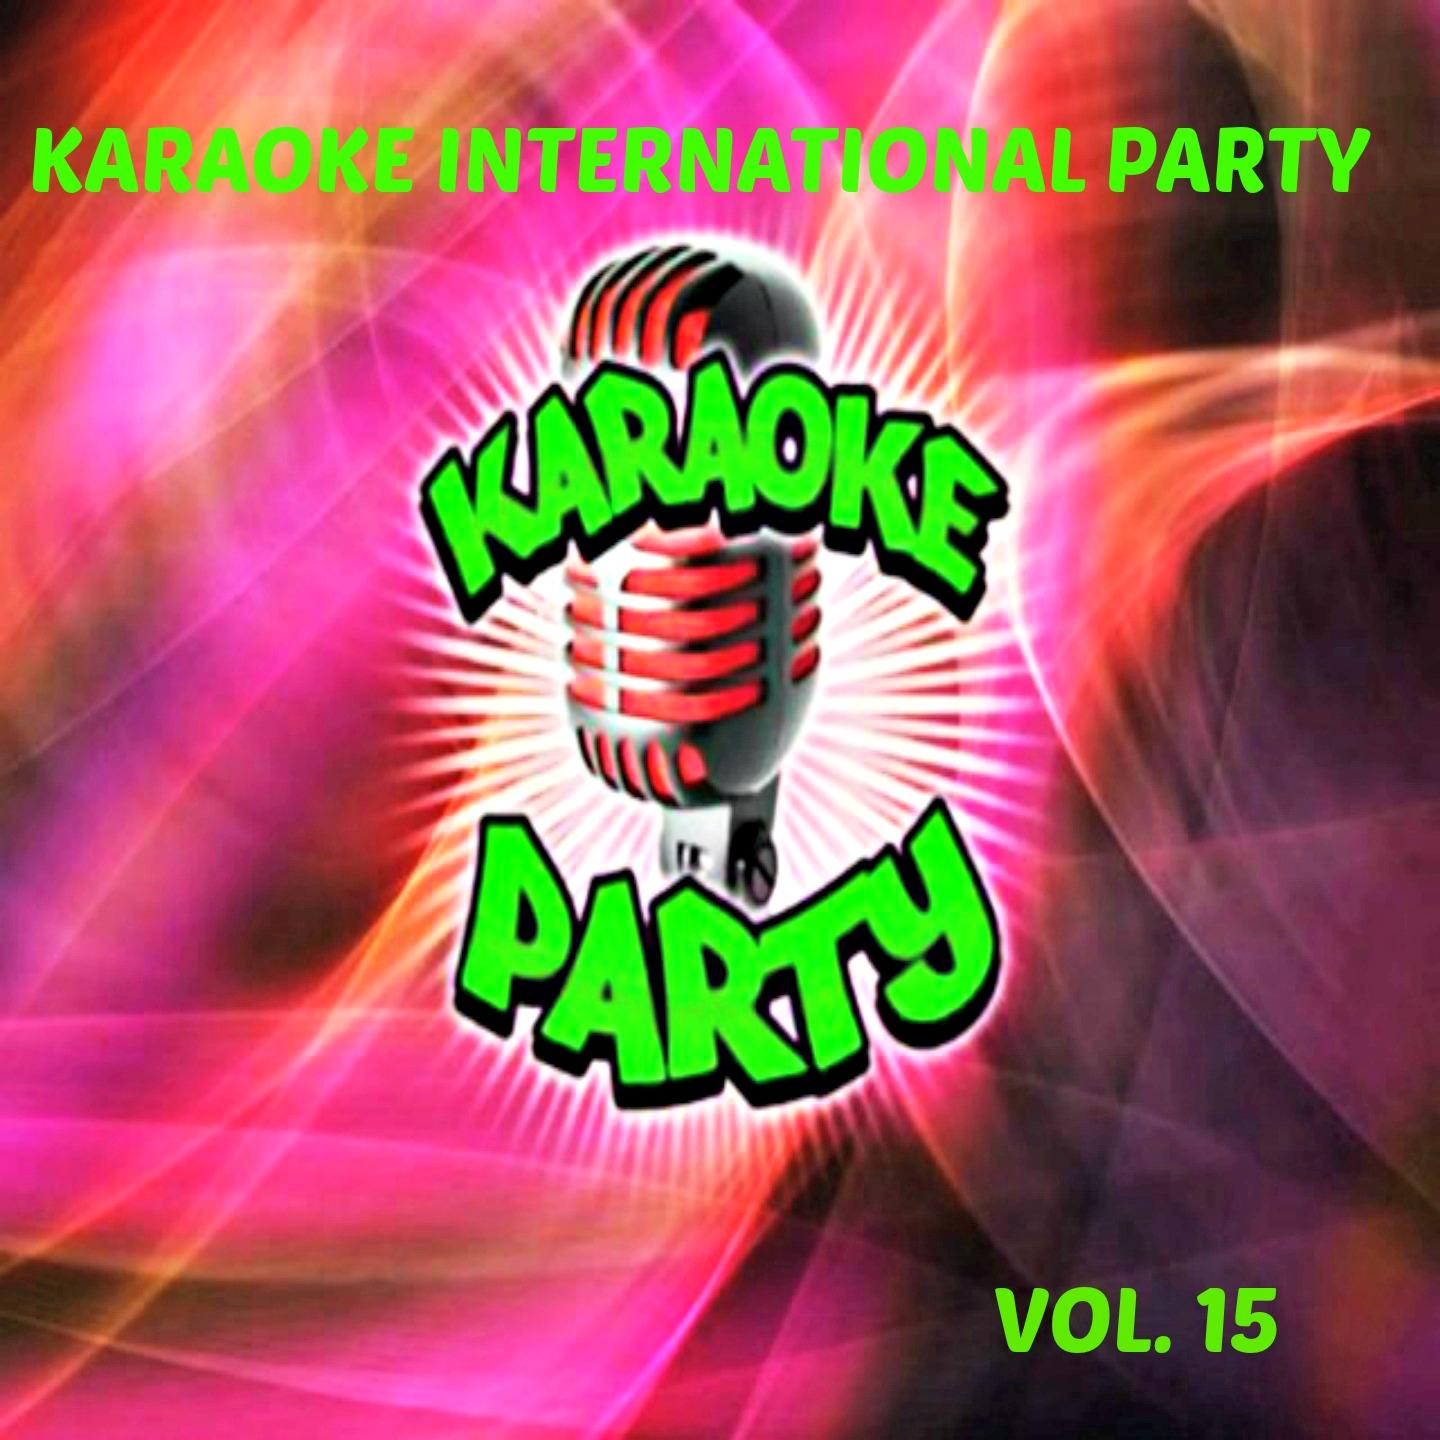 Karaoke International Party, Vol. 15